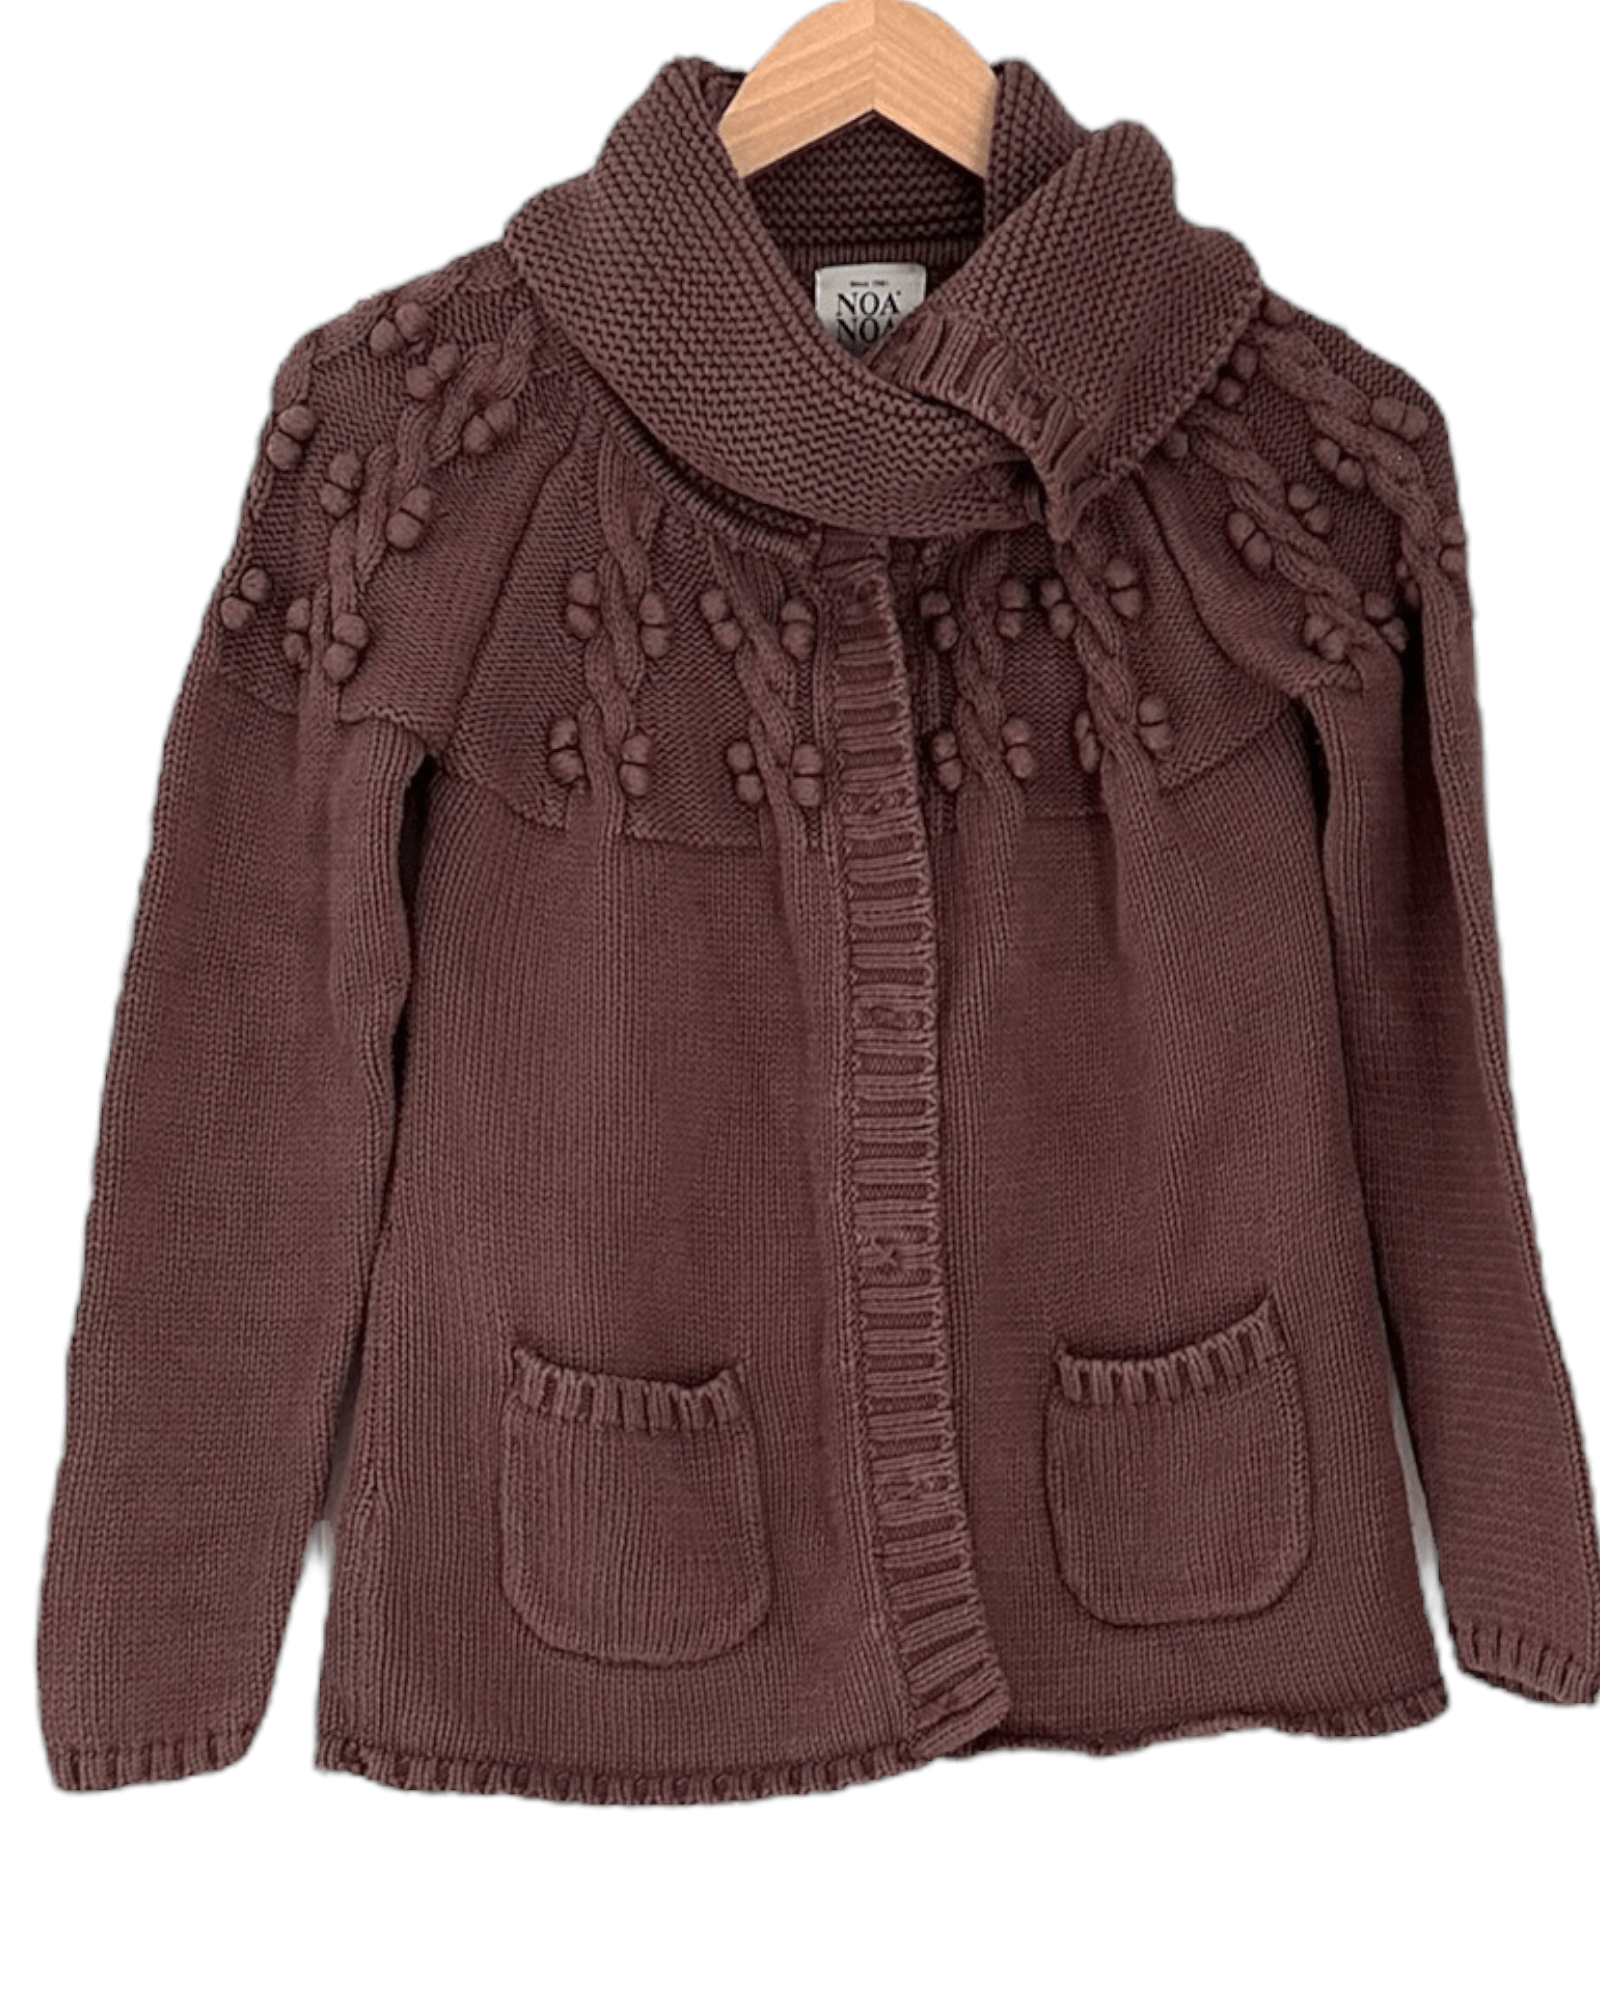 Soft Summer NOA NOA carob brown patch pocket contrast knit sweater jacket